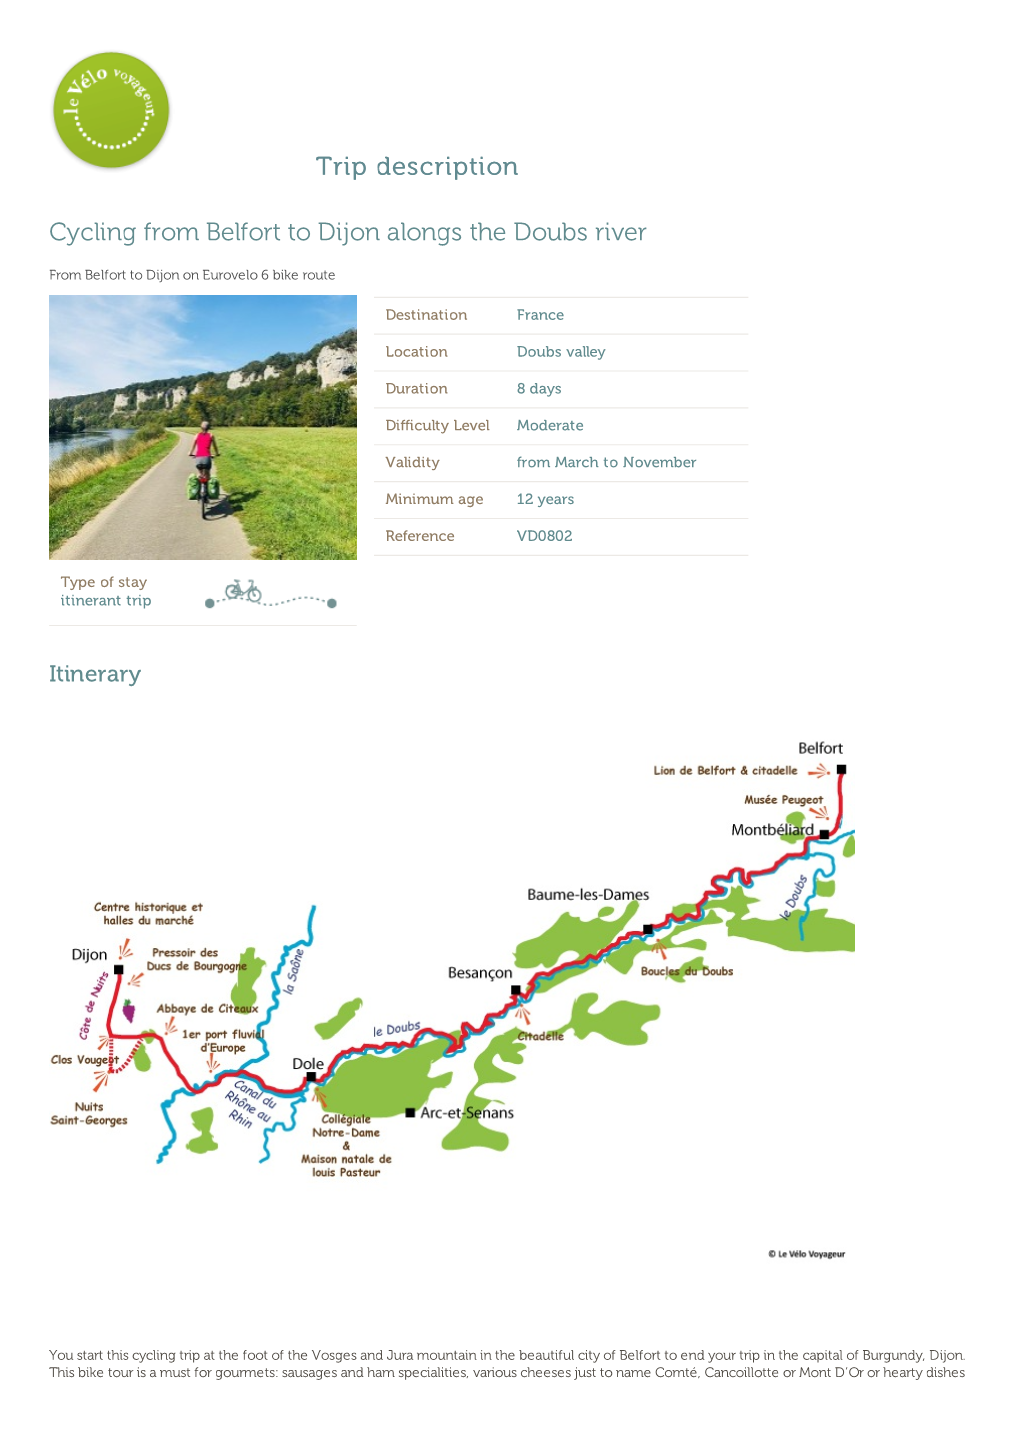 Trip Description Cycling from Belfort to Dijon Alongs the Doubs River